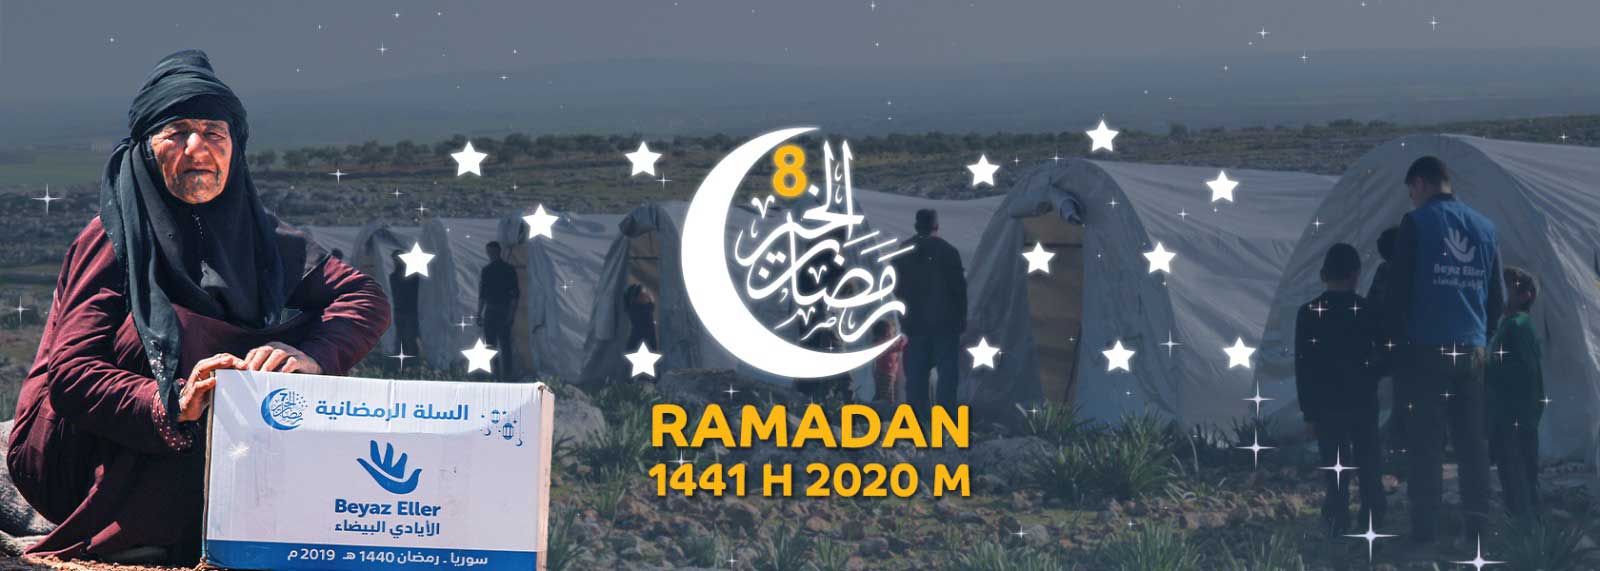 ramadan al khayr 8- header